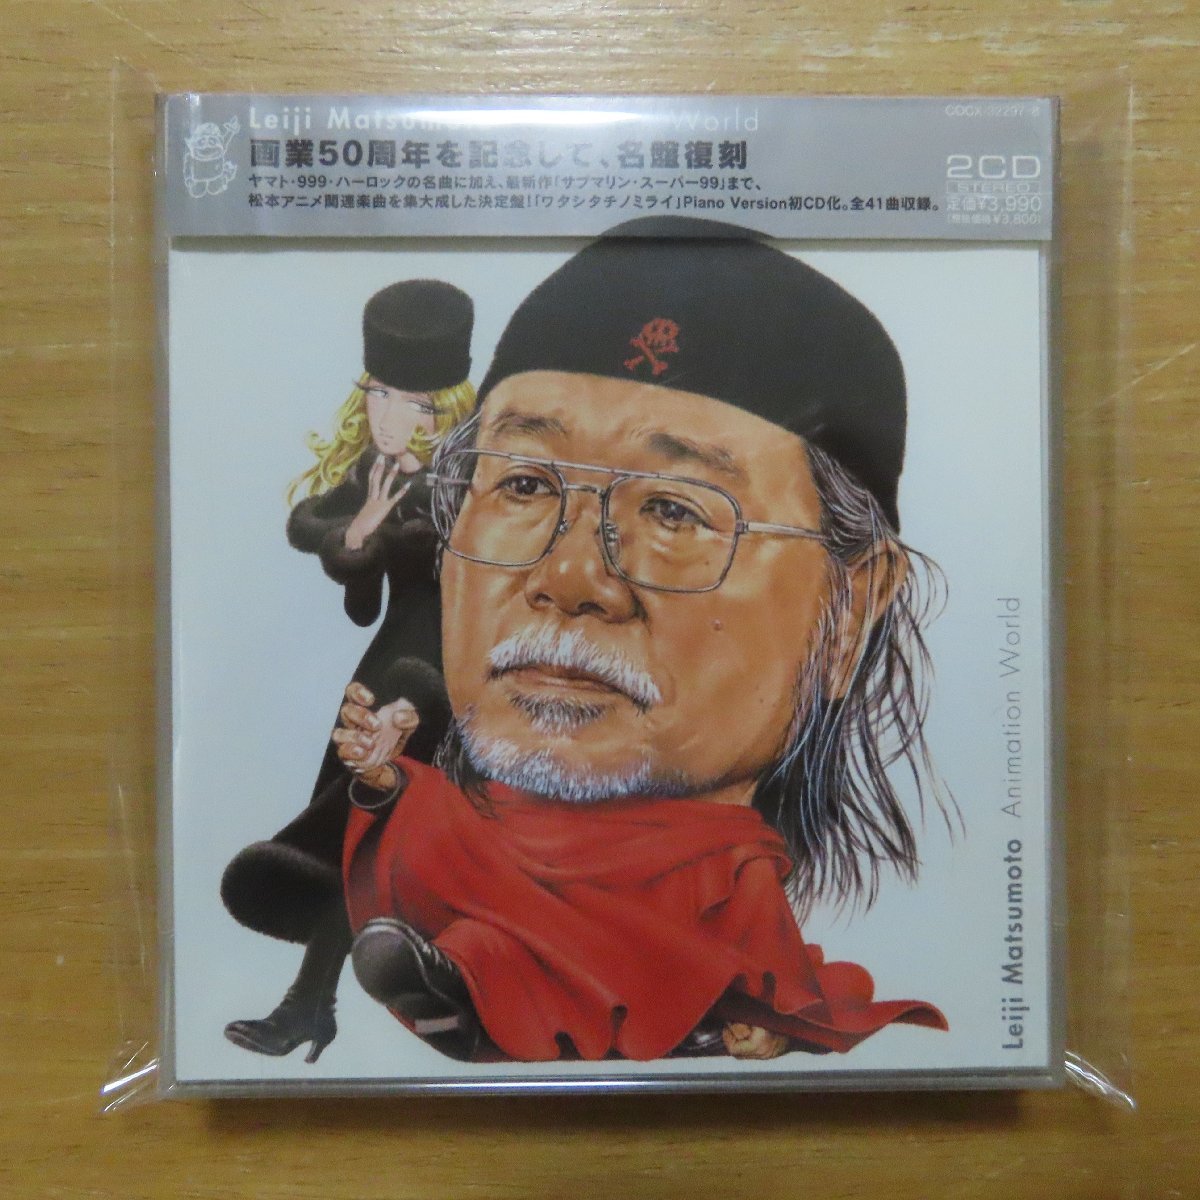 4988001923336;[2CD] anime * soundtrack / Matsumoto 0 .. world 